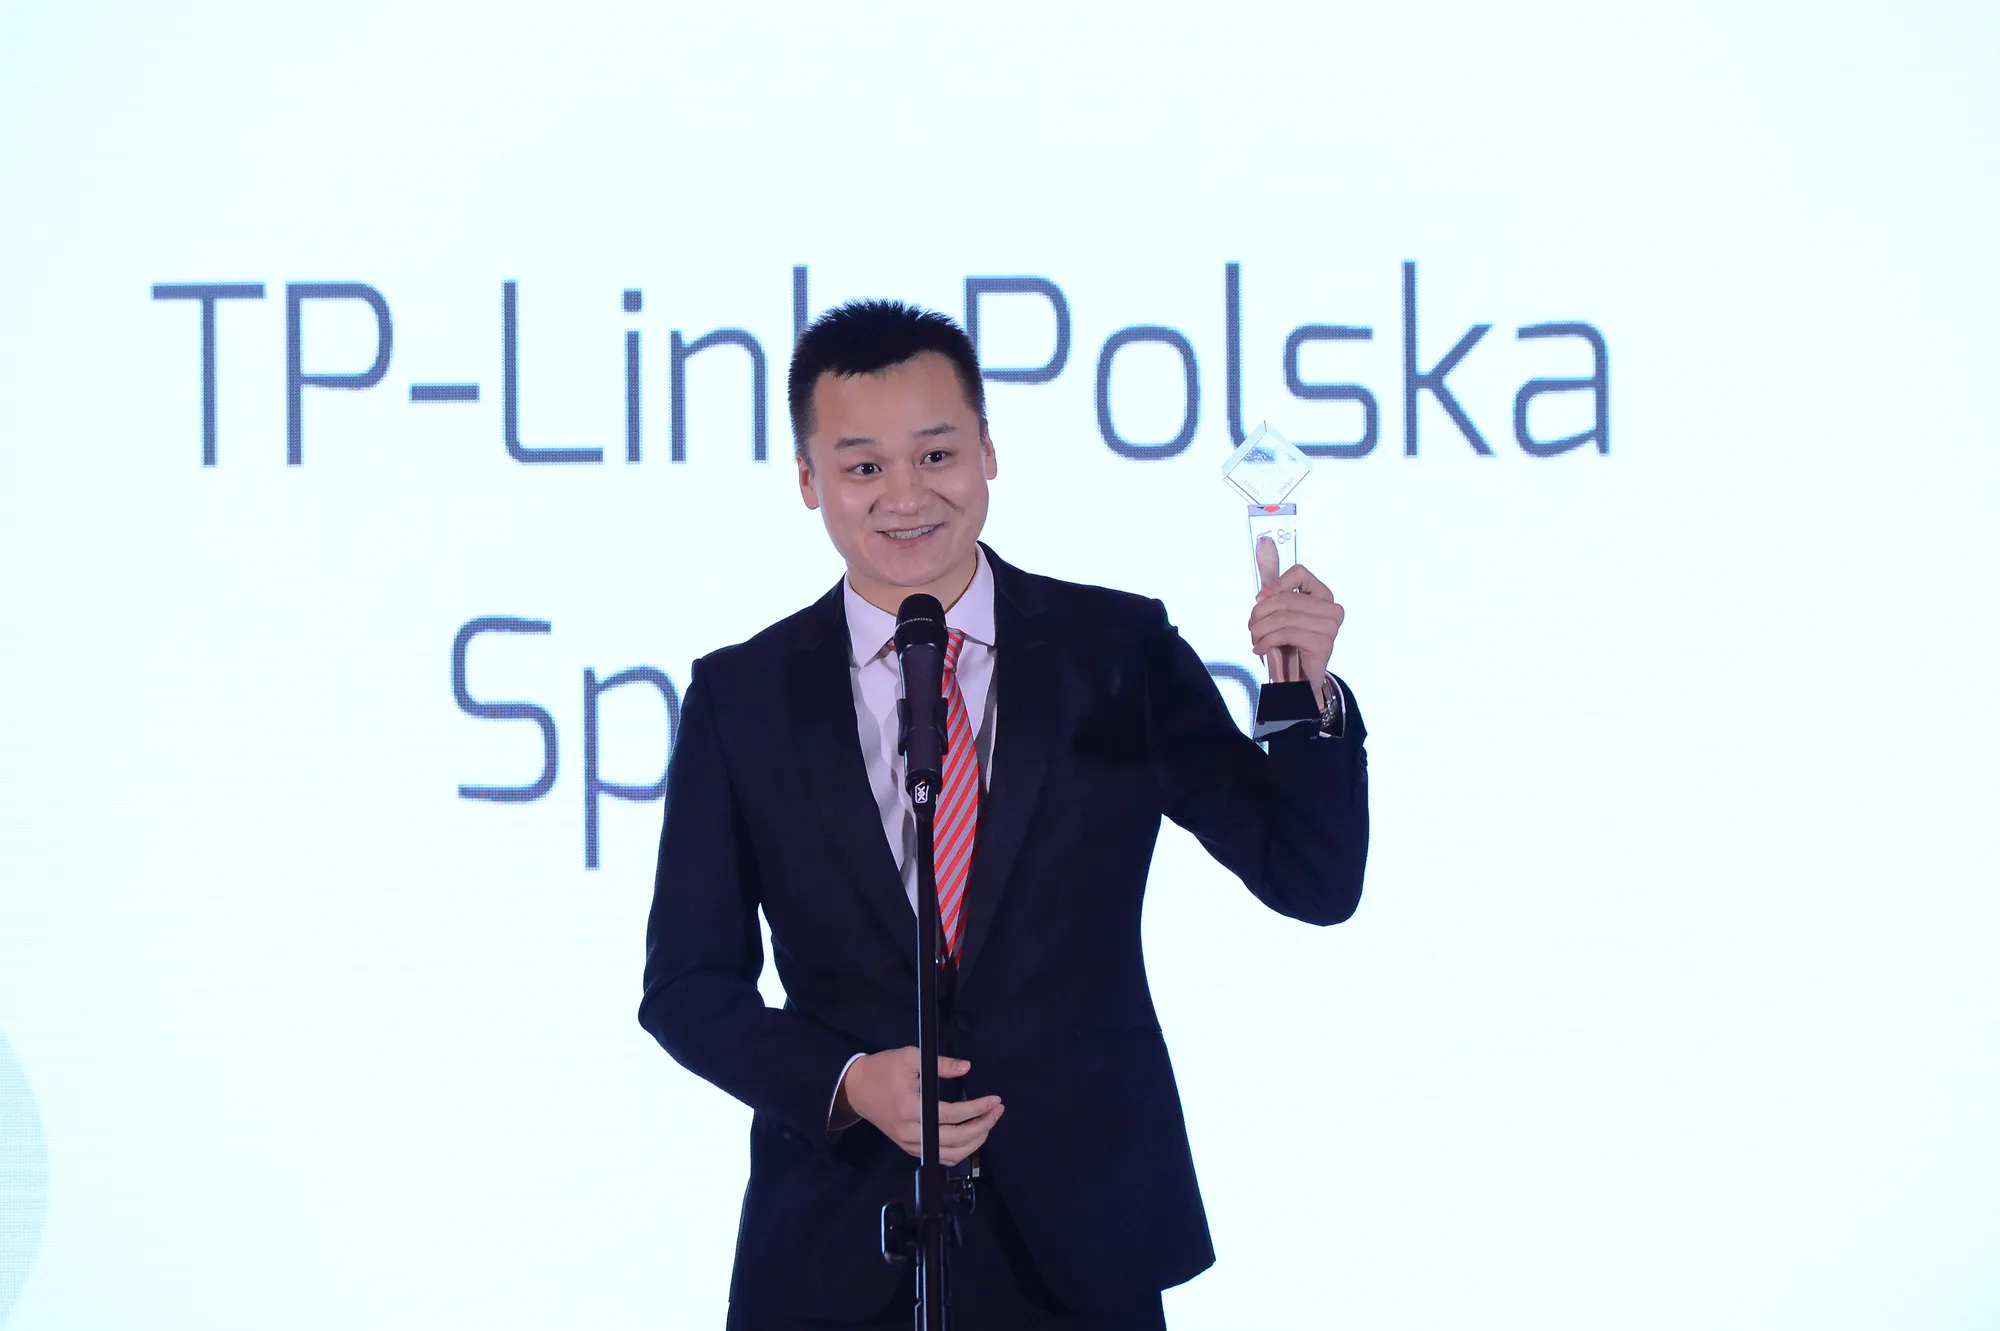 TP-Link Polska laureatem nagrody INNOWATORY WPROST 2017